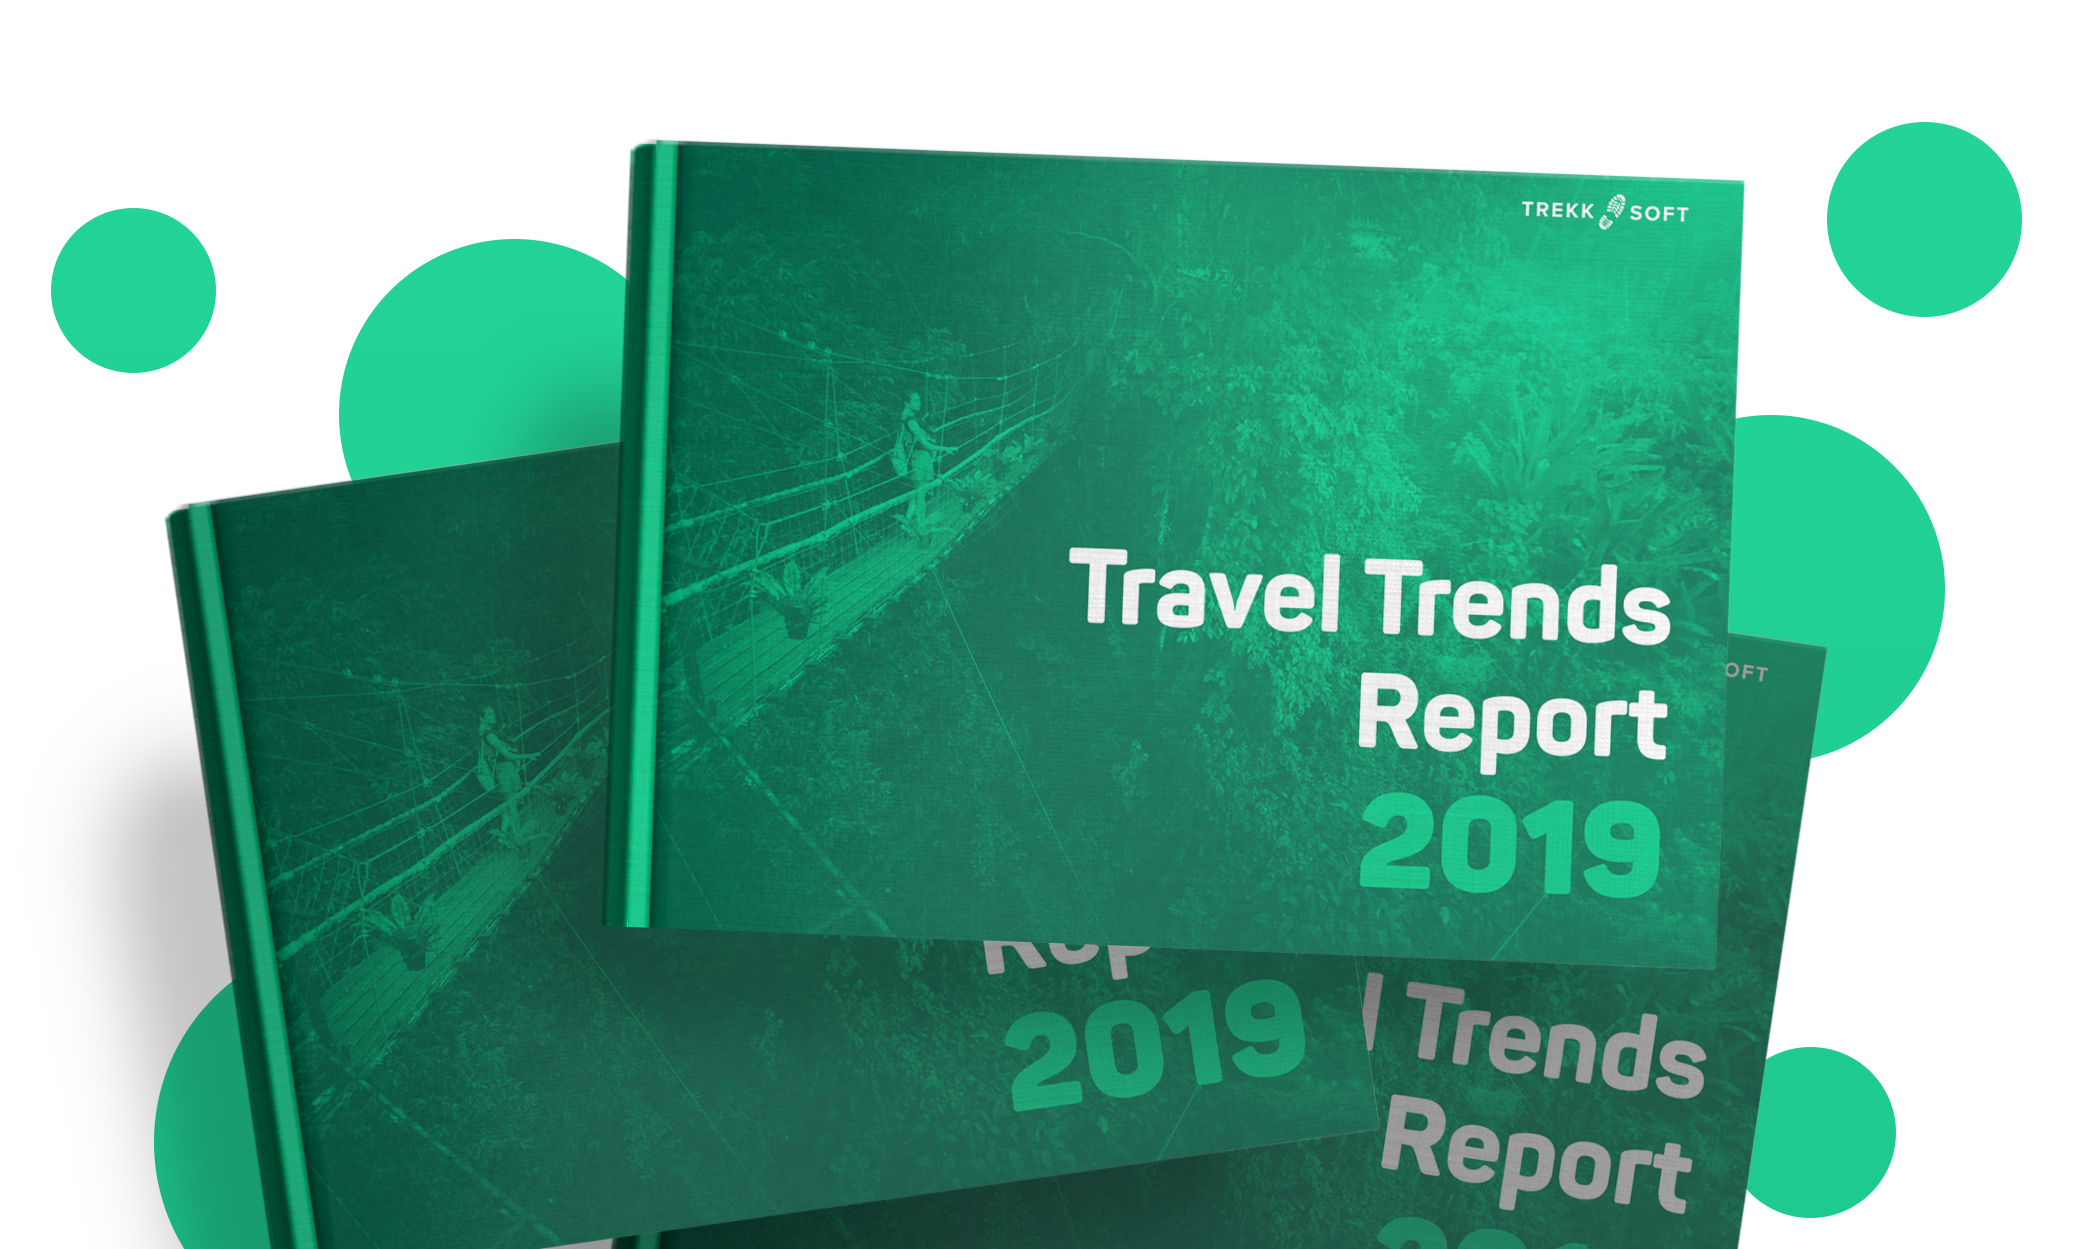 Travel Trends Report 2019